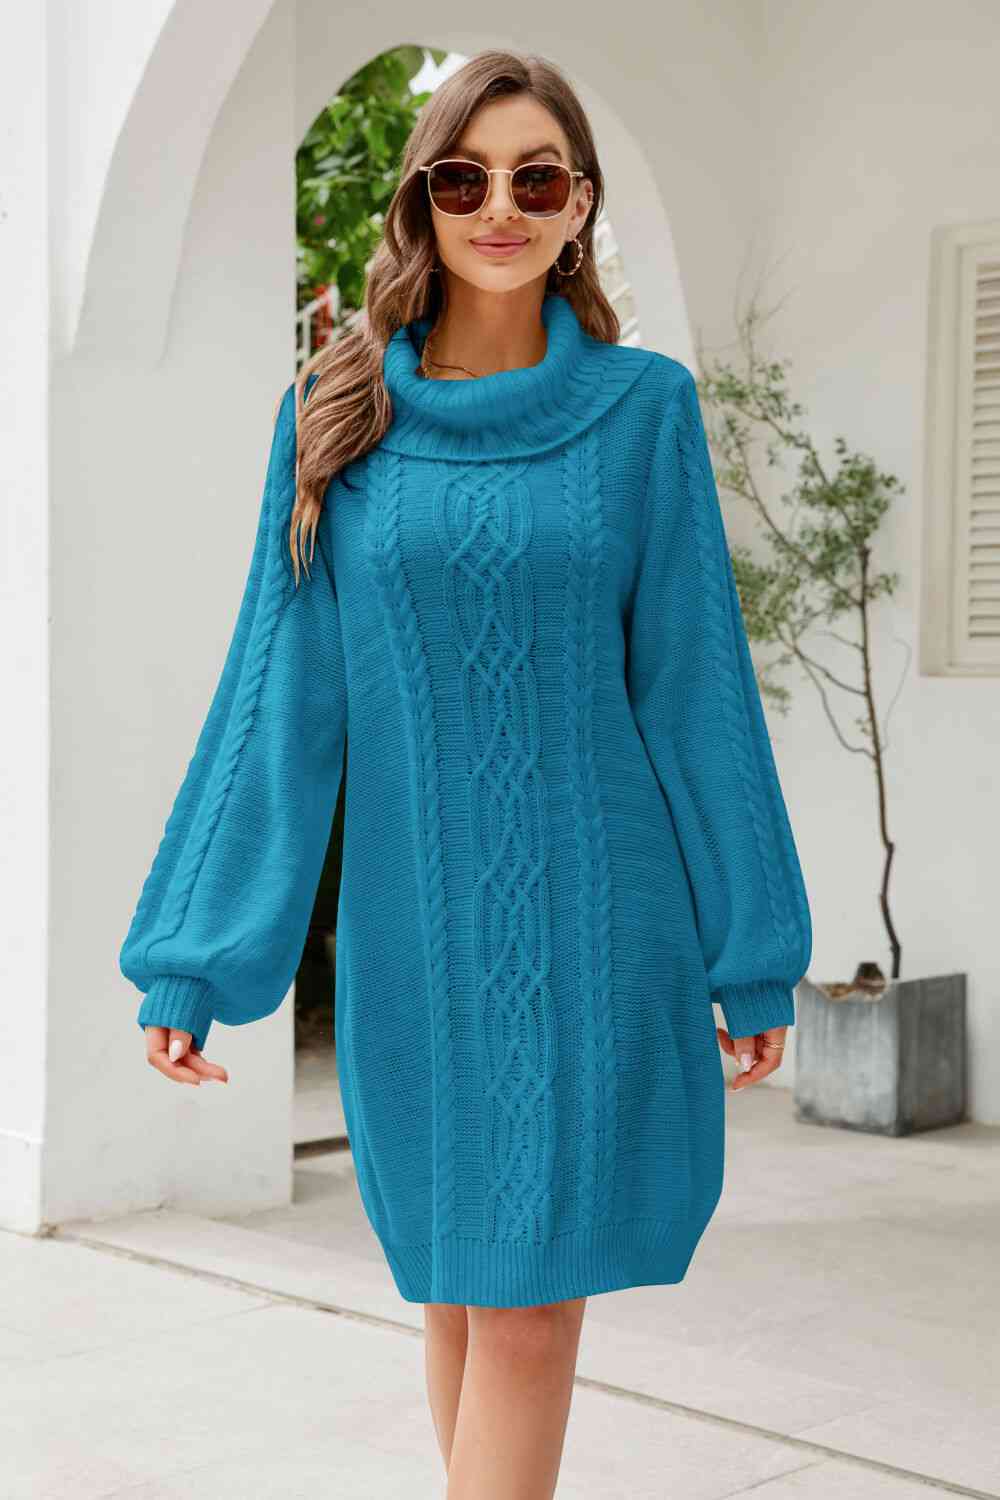 Woven Right Mixed Knit Turtleneck Lantern Sleeve Sweater Dress Teal